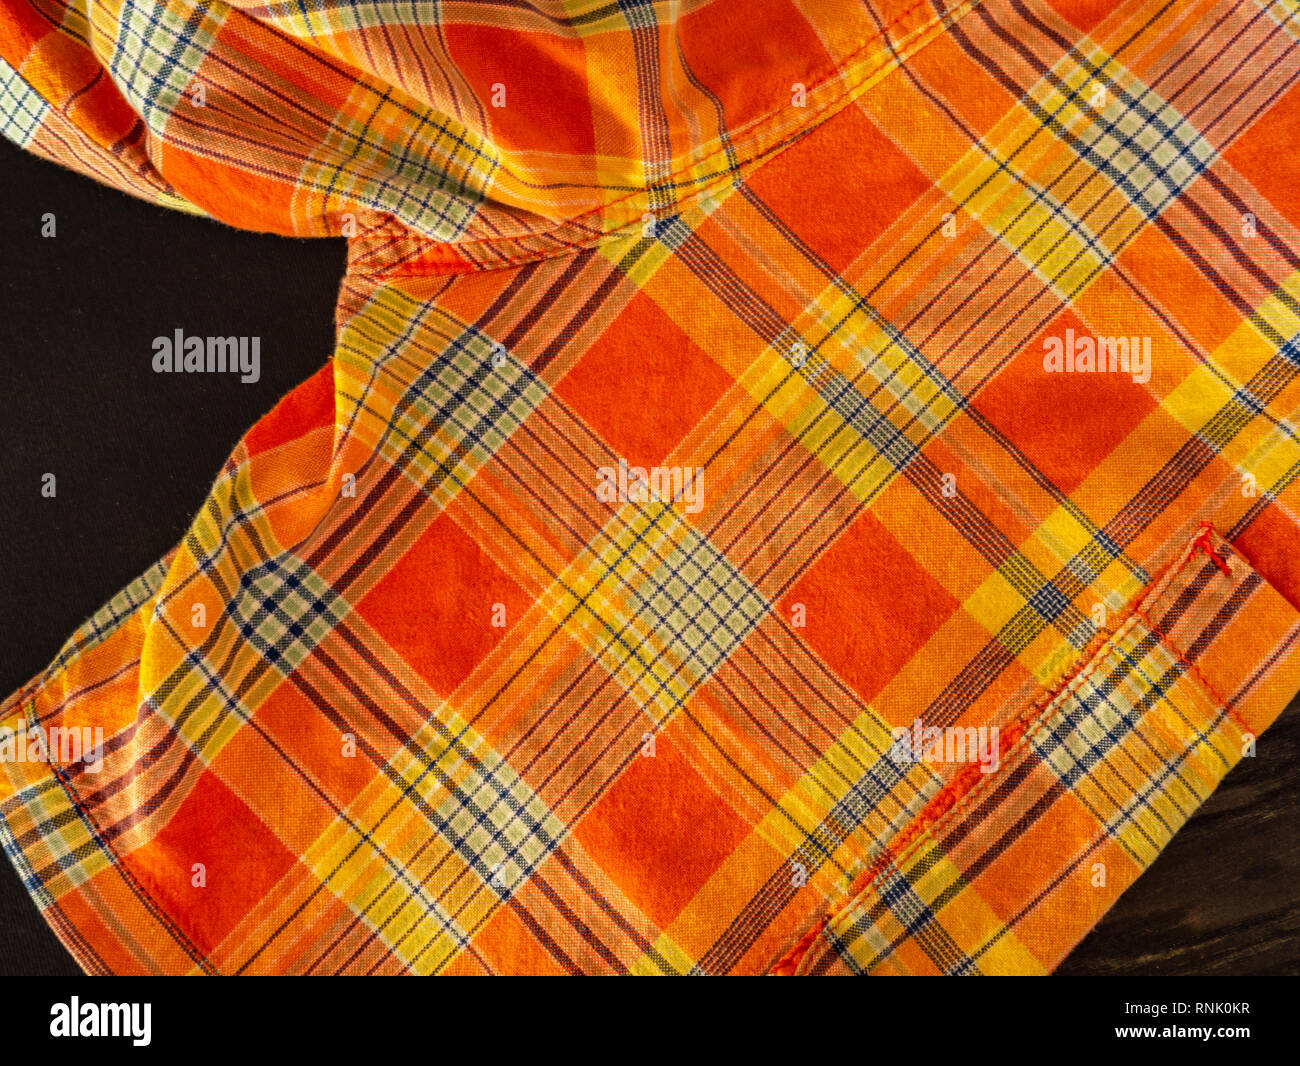 Orange and yellow plaid print as background. Scottish tartan pattern. Symmetric rhombus pattern. Stock Photo